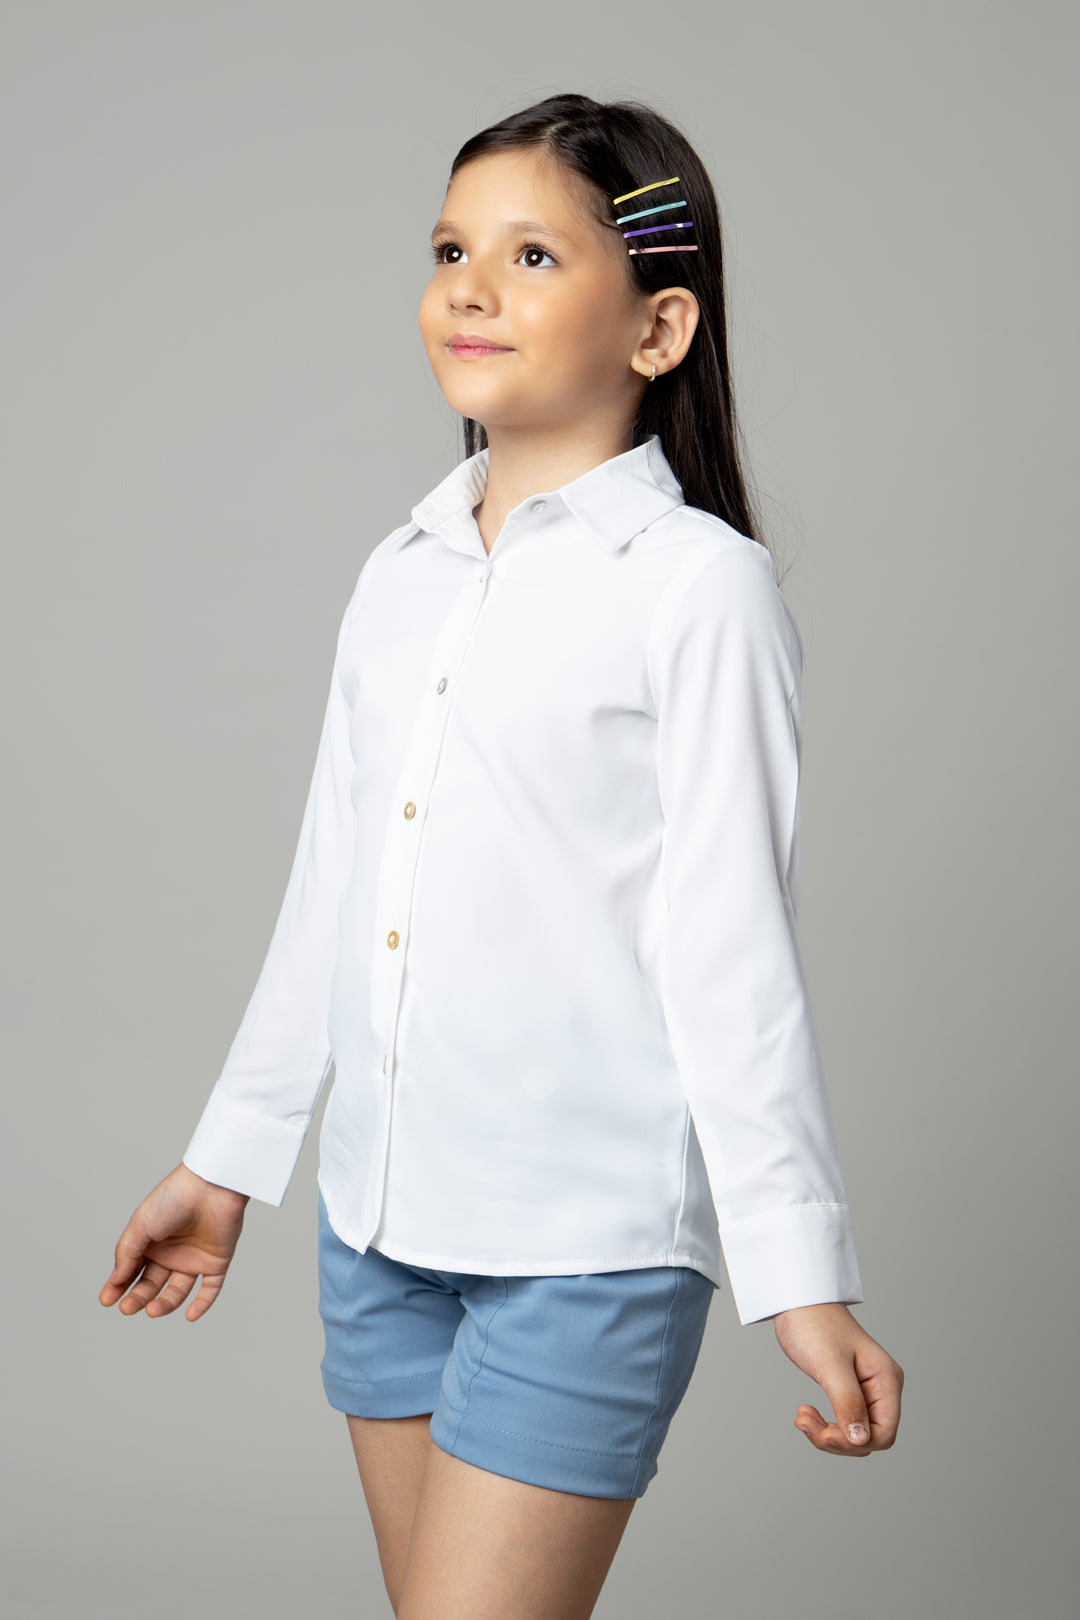 Plain White Spread Collar Casual Shirt For Girls